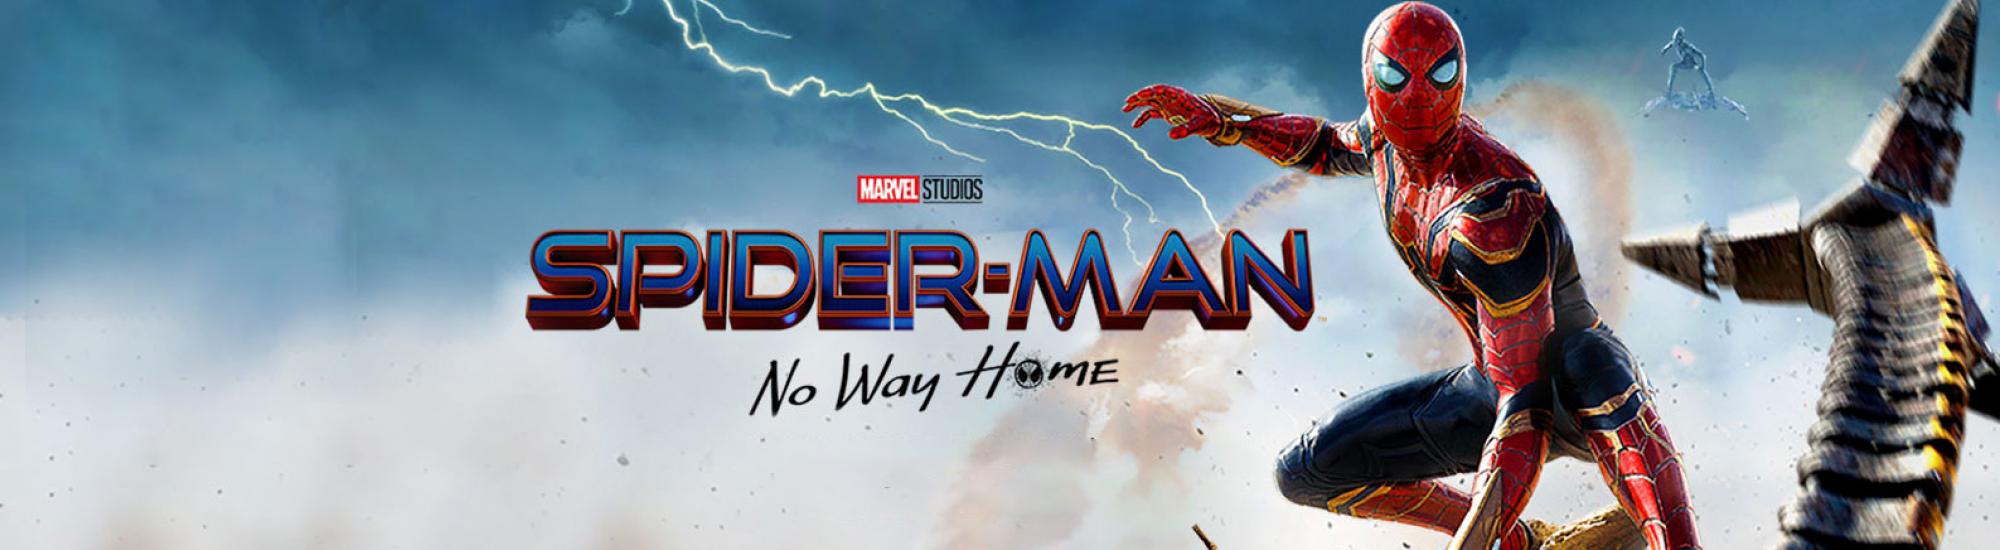 spider man no way home screenx poster